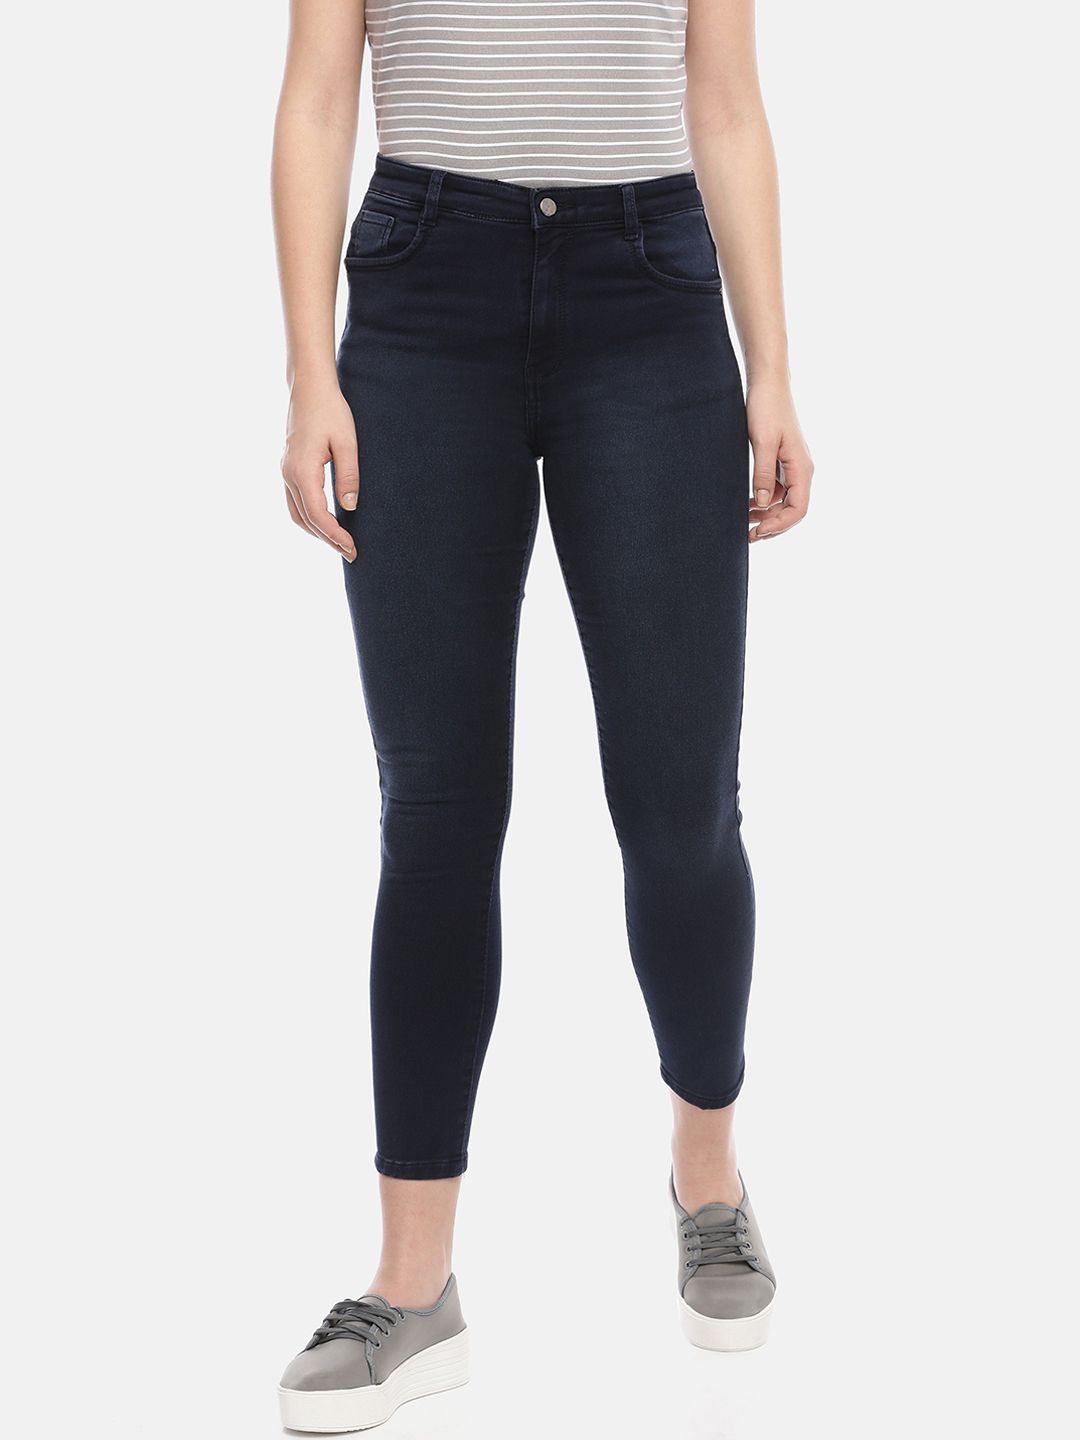 GOLDSTROMS Women Blue Slim Fit Mid-Rise Clean Look Denim Jeans Price in India